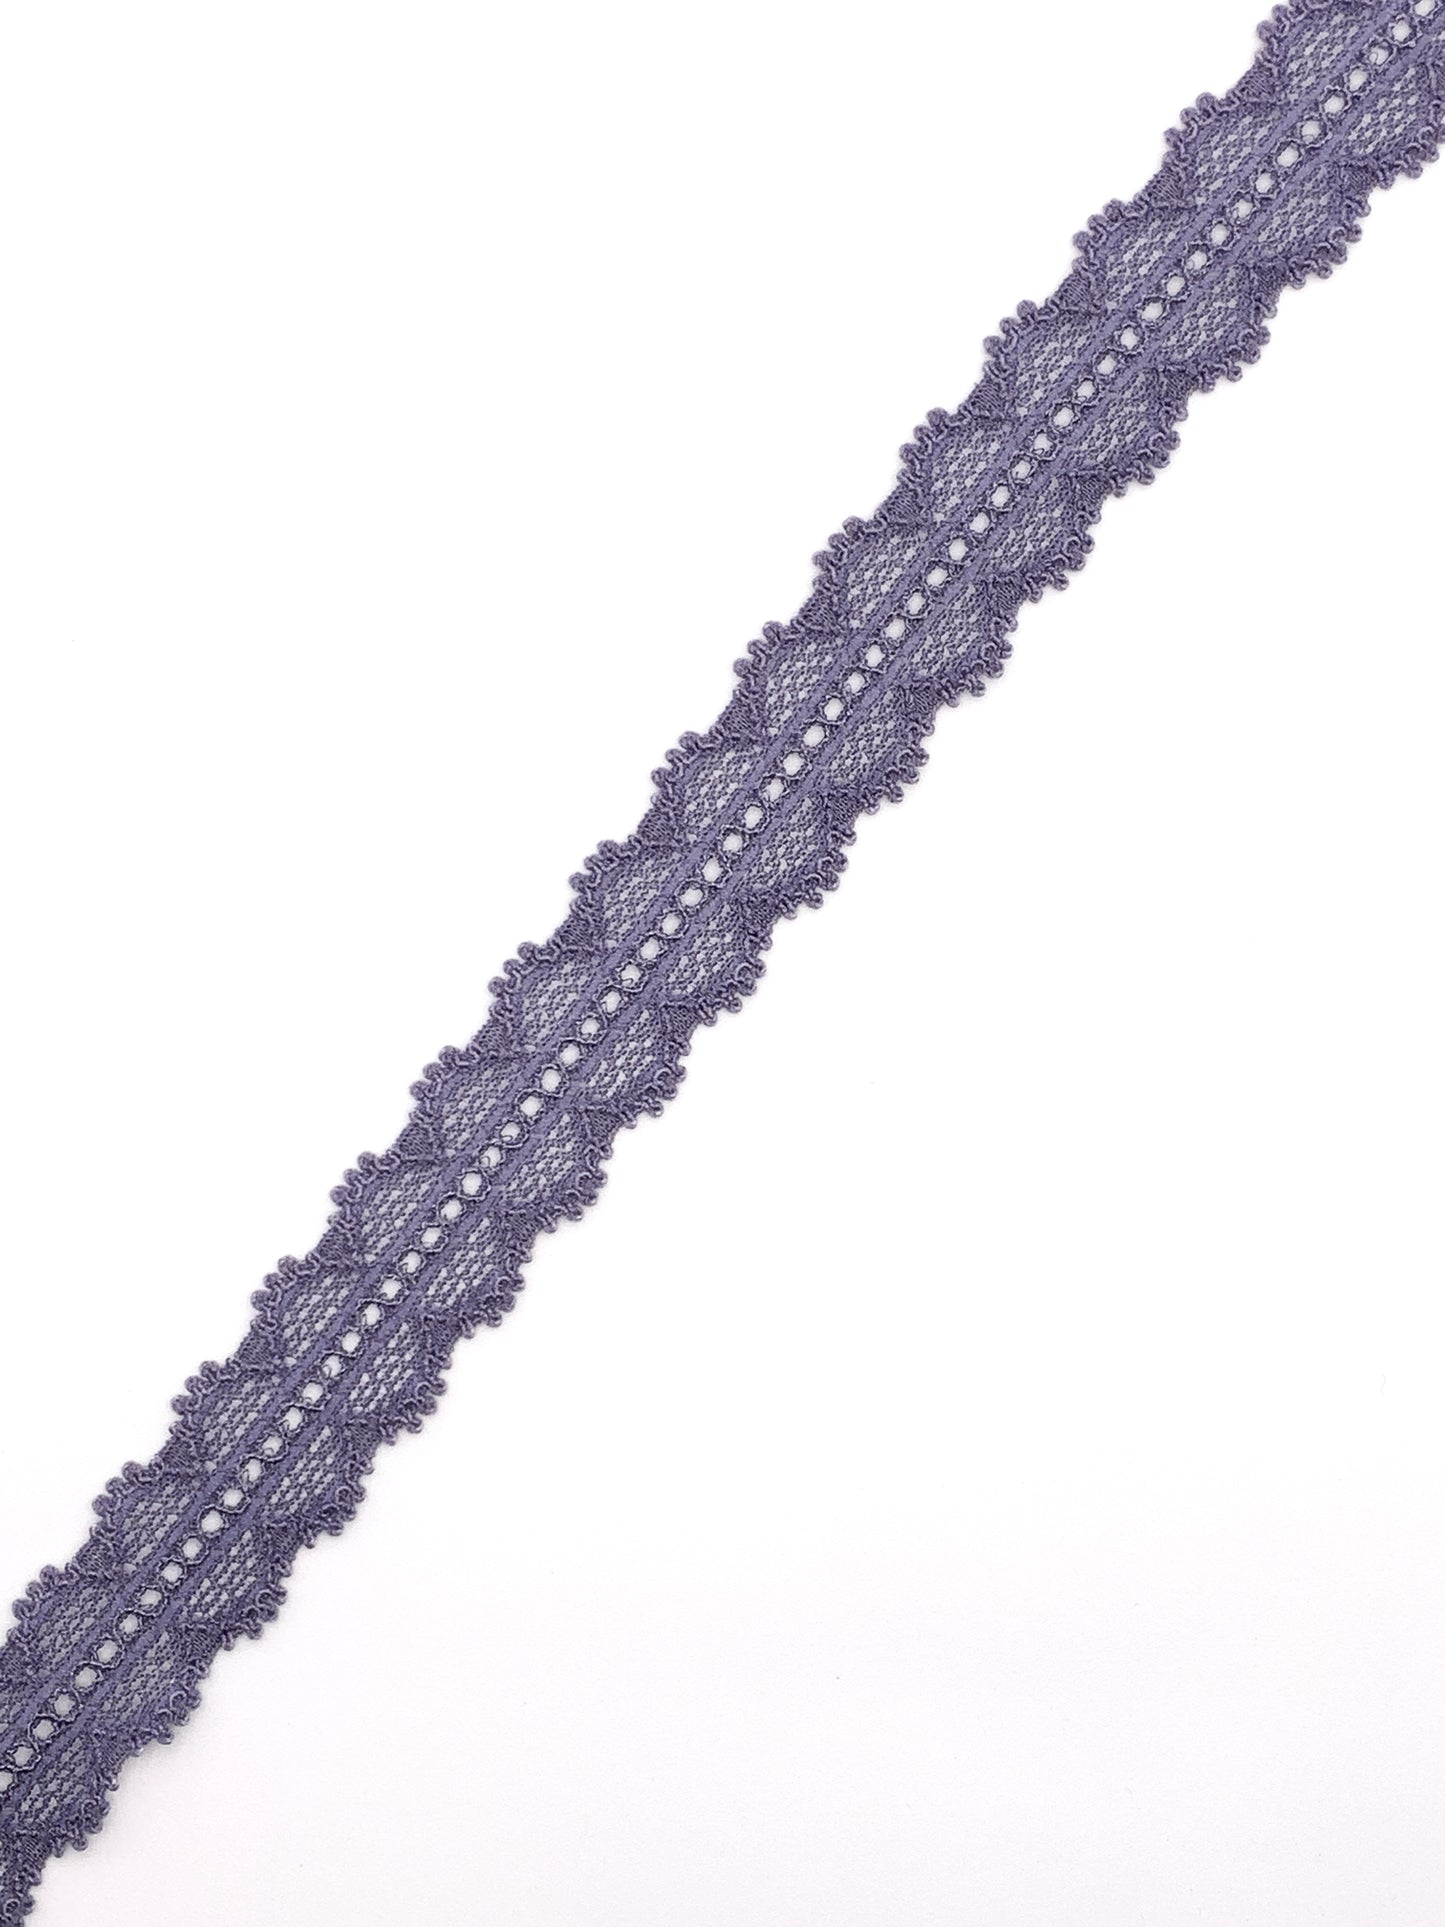 Narrow Stretch Lace Trim | 1.5cm Wide | Old Lavender | Price per metre